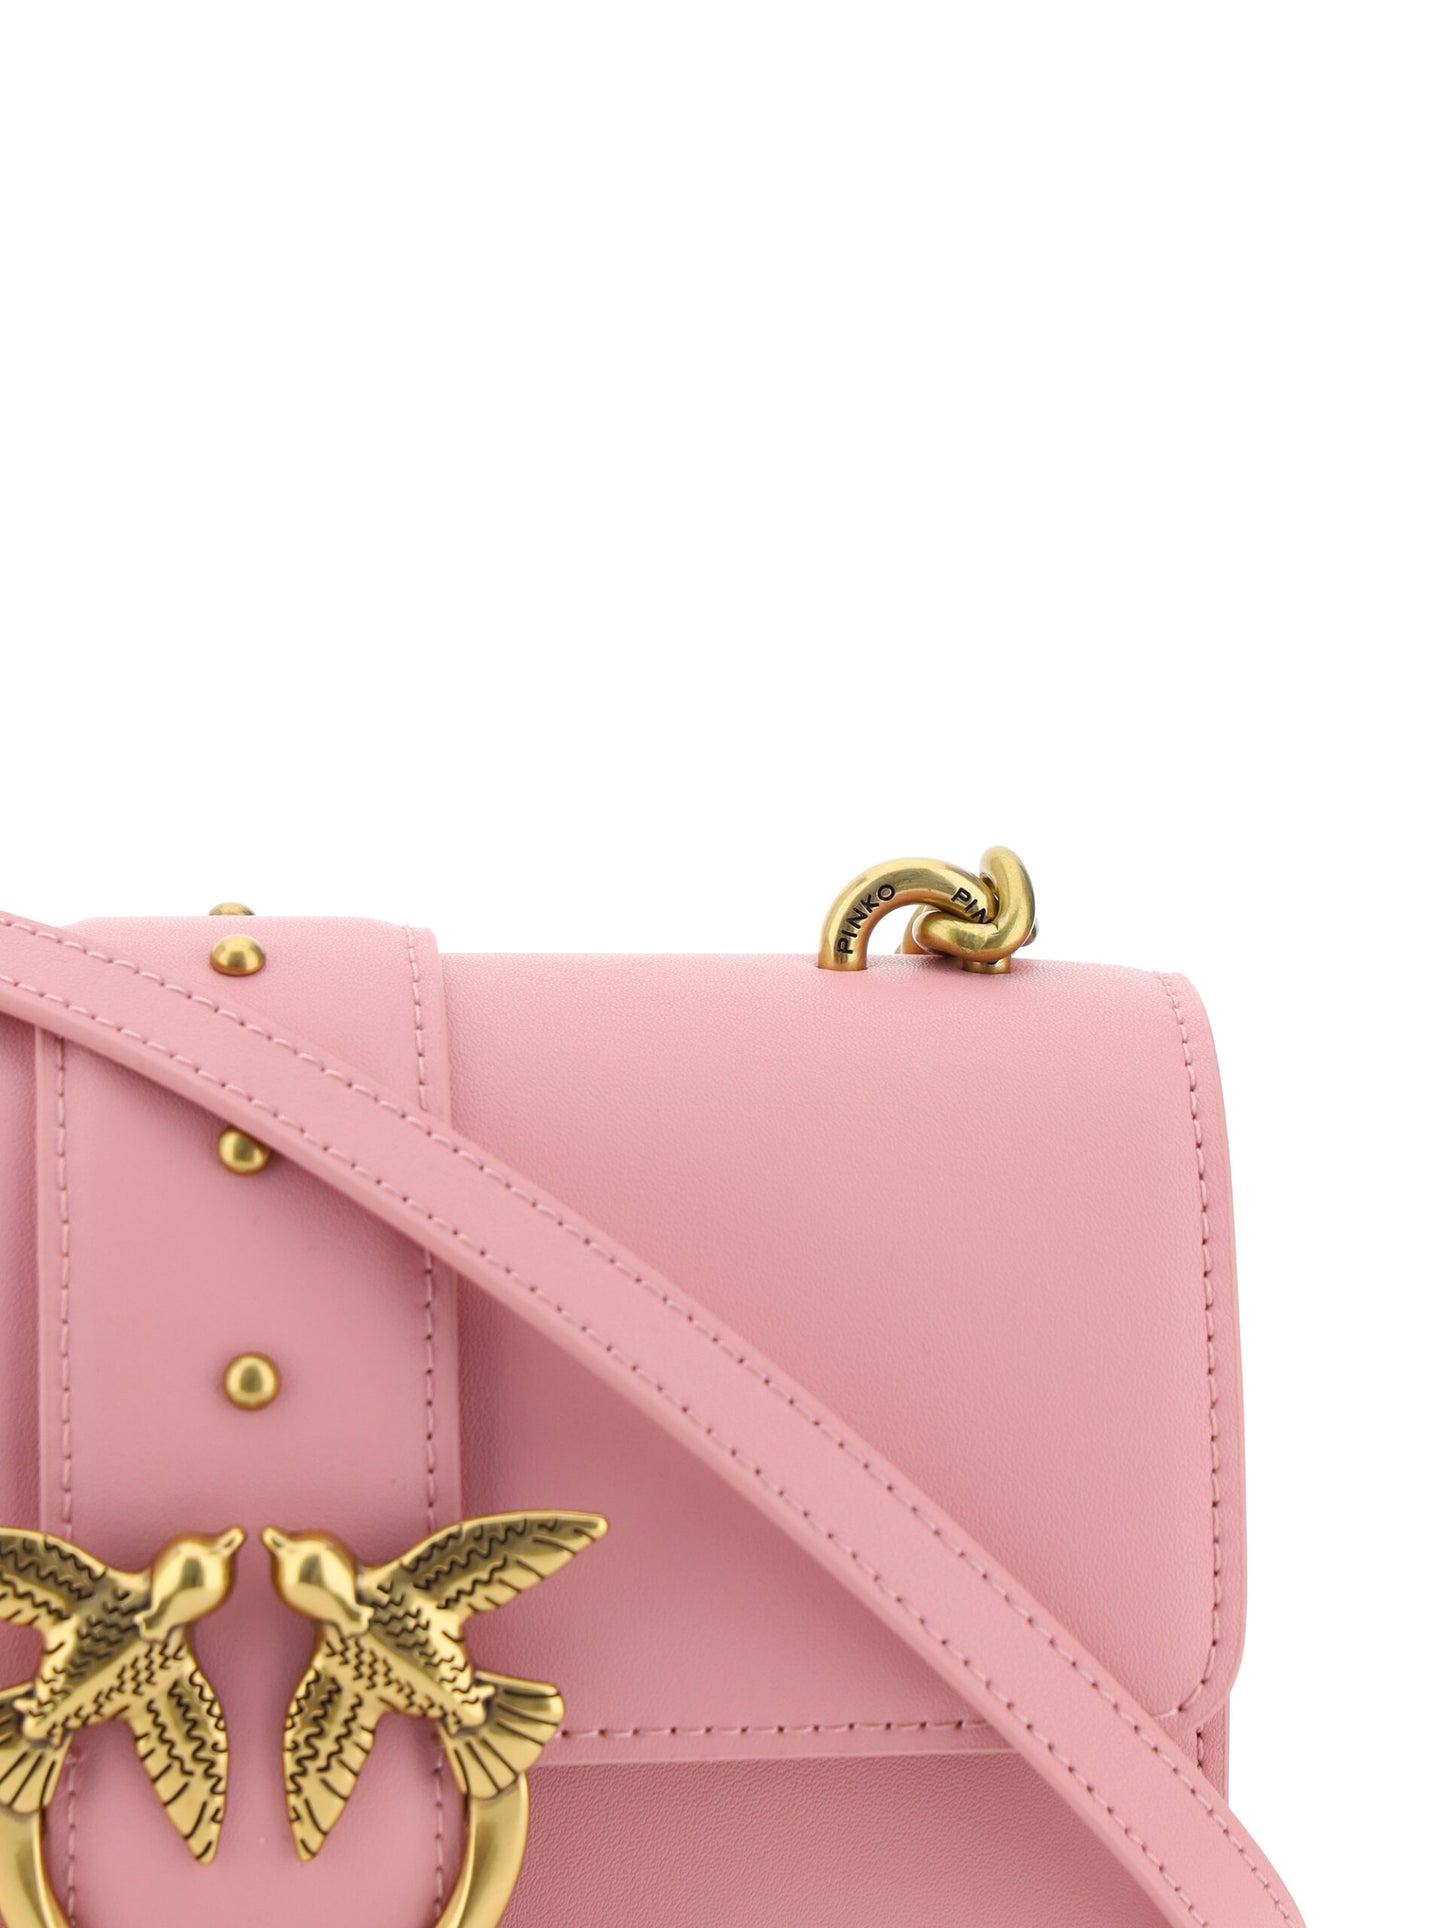 Elegant Mini Love One Shoulder Bag in Bubble Pink